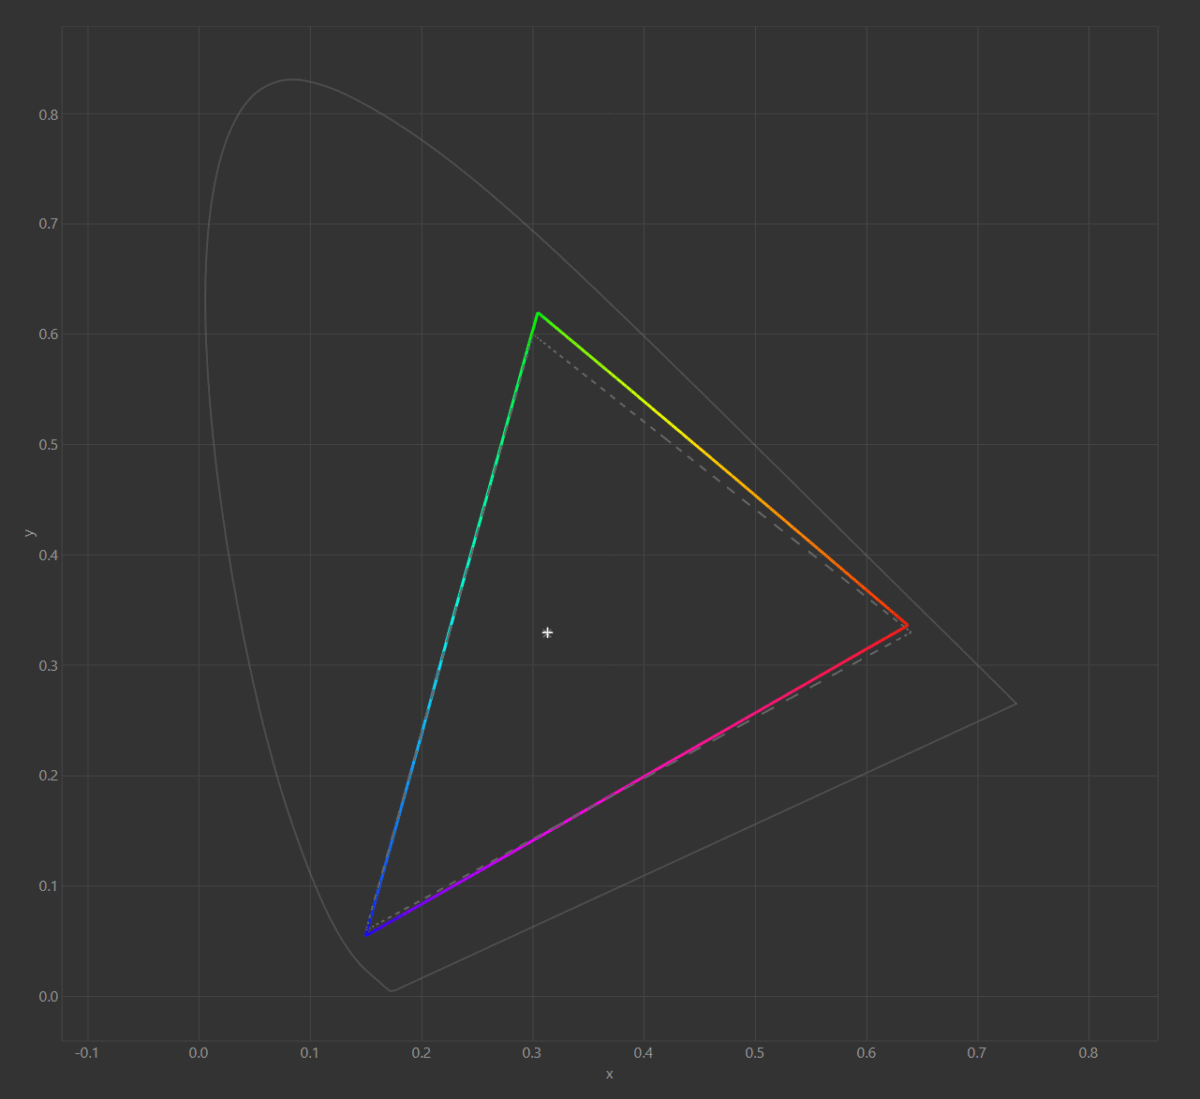 Corsair Voyager gamut graph NE160QDM NZ1 1 2022 10 10 10 38 120cdm² D6500 2.2 F S XYZLUTMTX